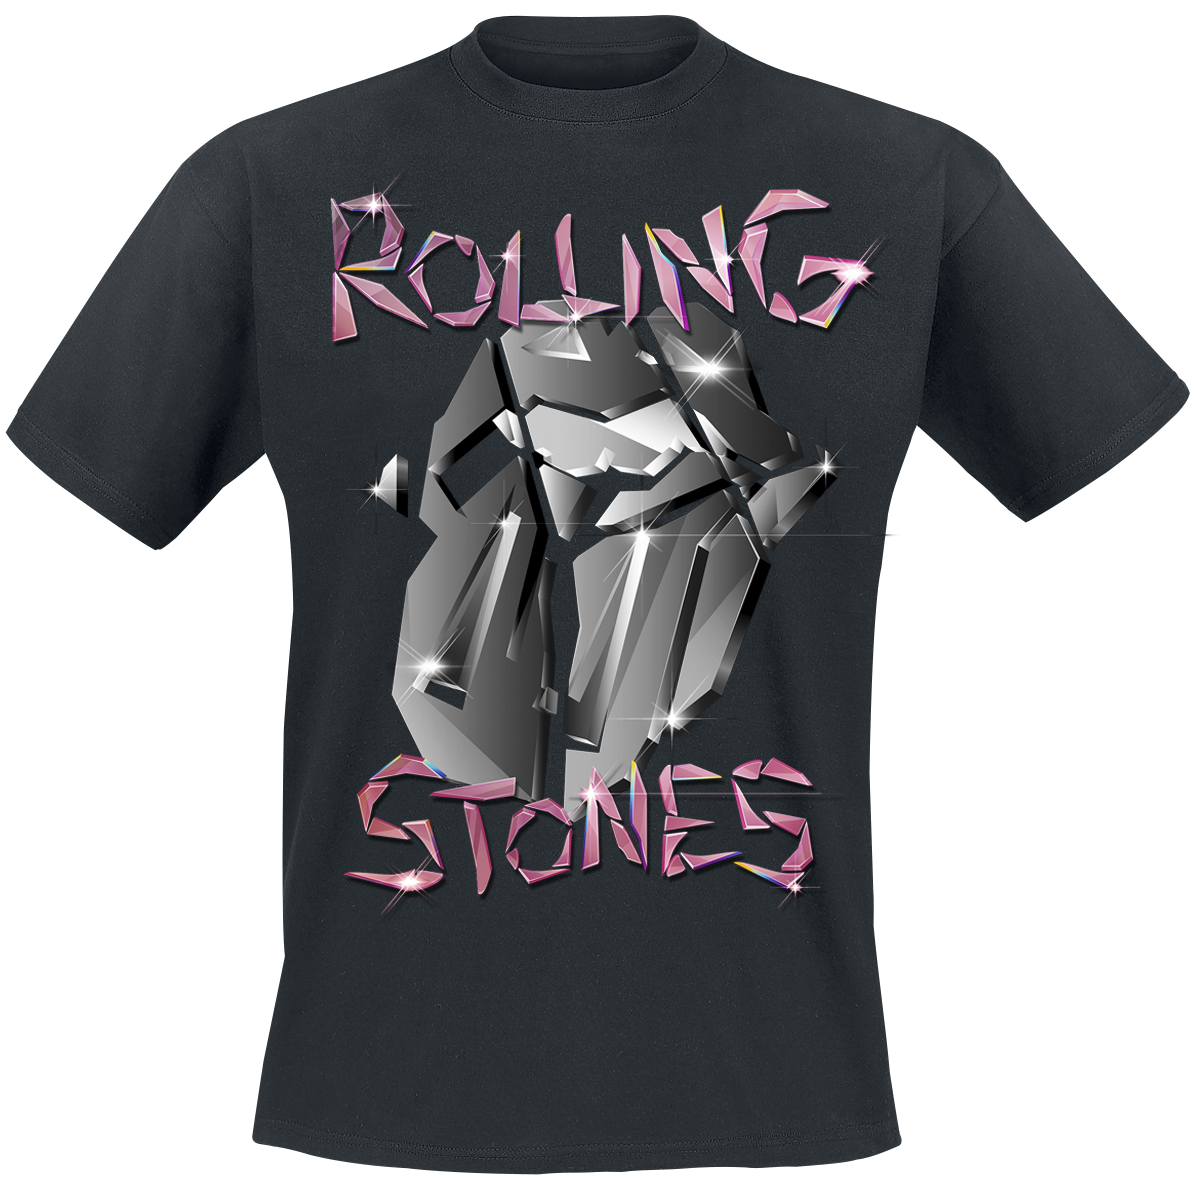 The Rolling Stones - Pop Up Tour Germany - Exclusive T-Shirt - T-Shirt - schwarz - EMP Exklusiv!